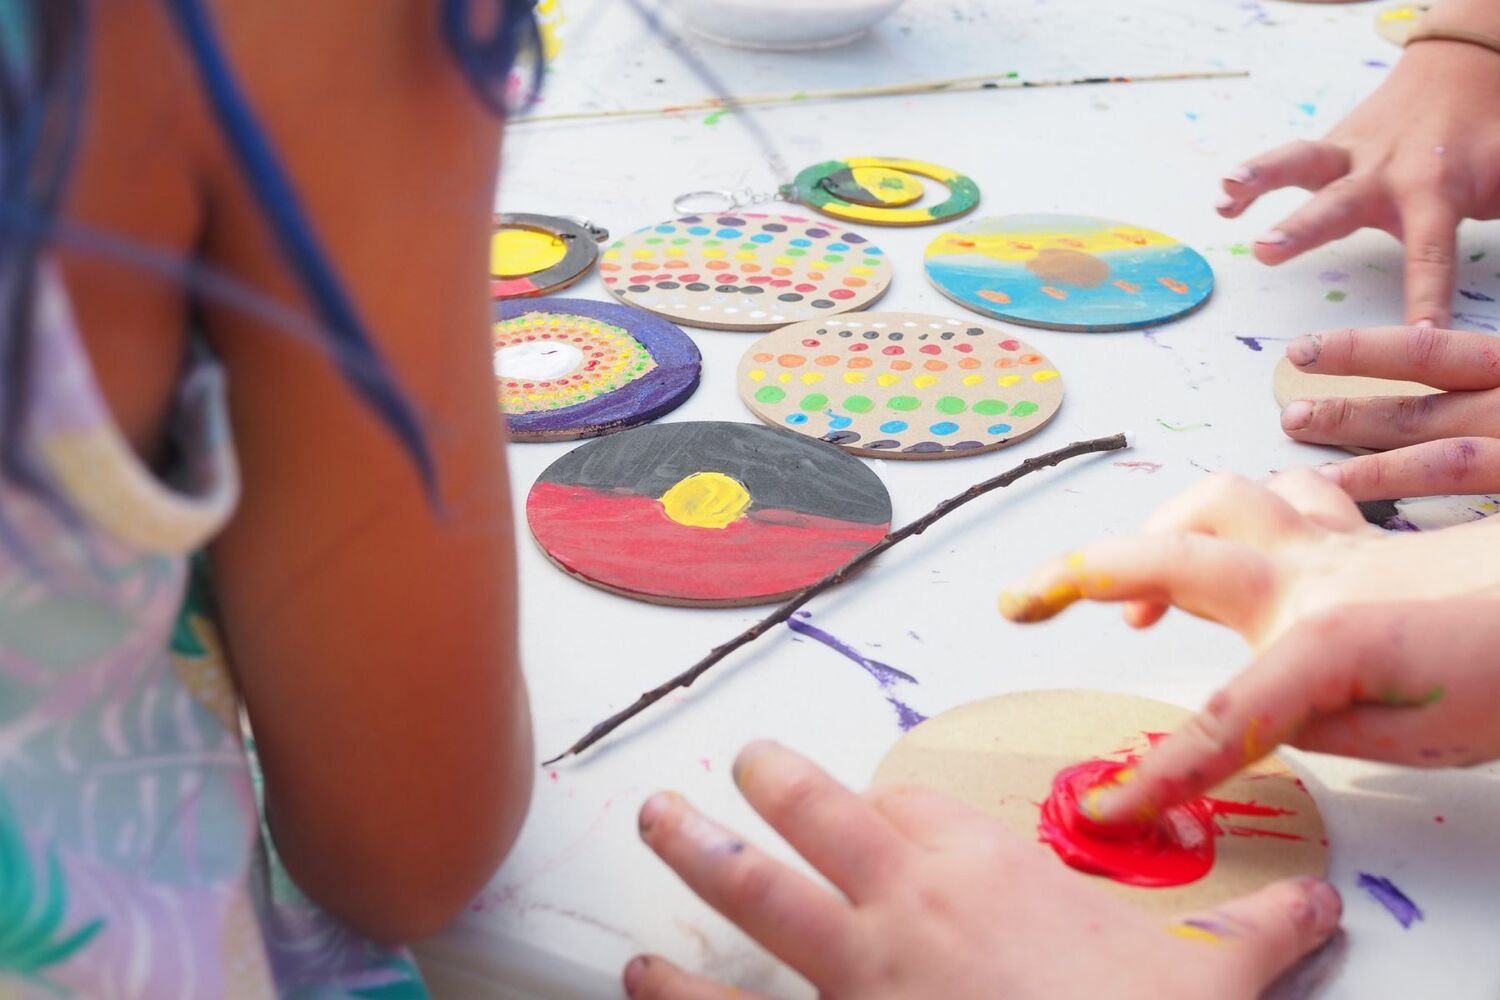 Children painting aboriginal artwork with their fingers